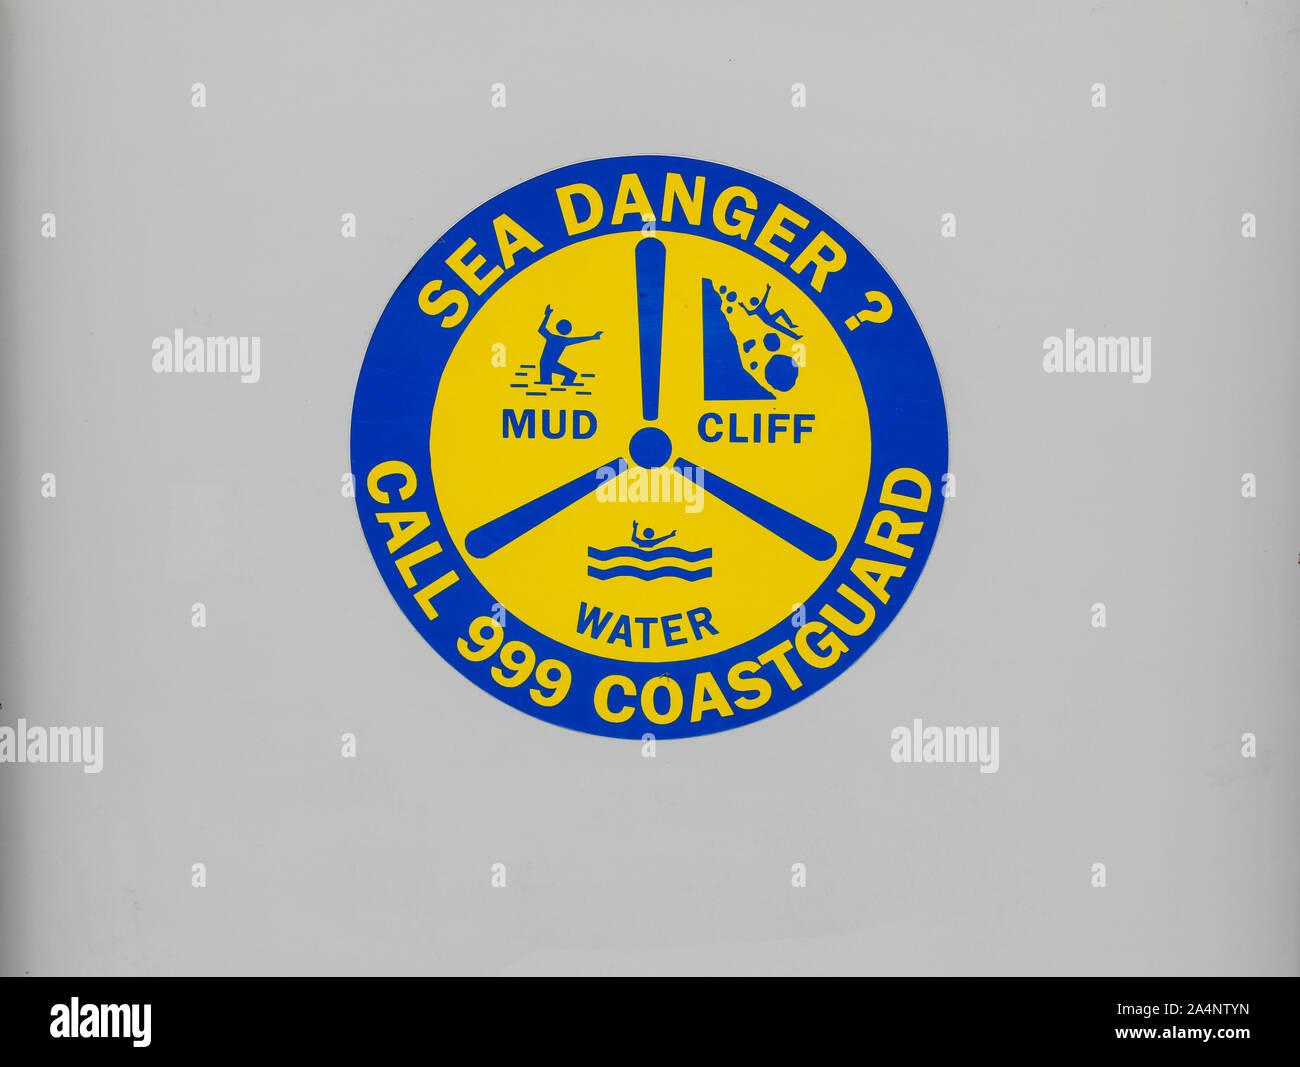 A sign saying 'Sea danger - call 999 coastguard' and mud, cliff, water, England, UK Stock Photo